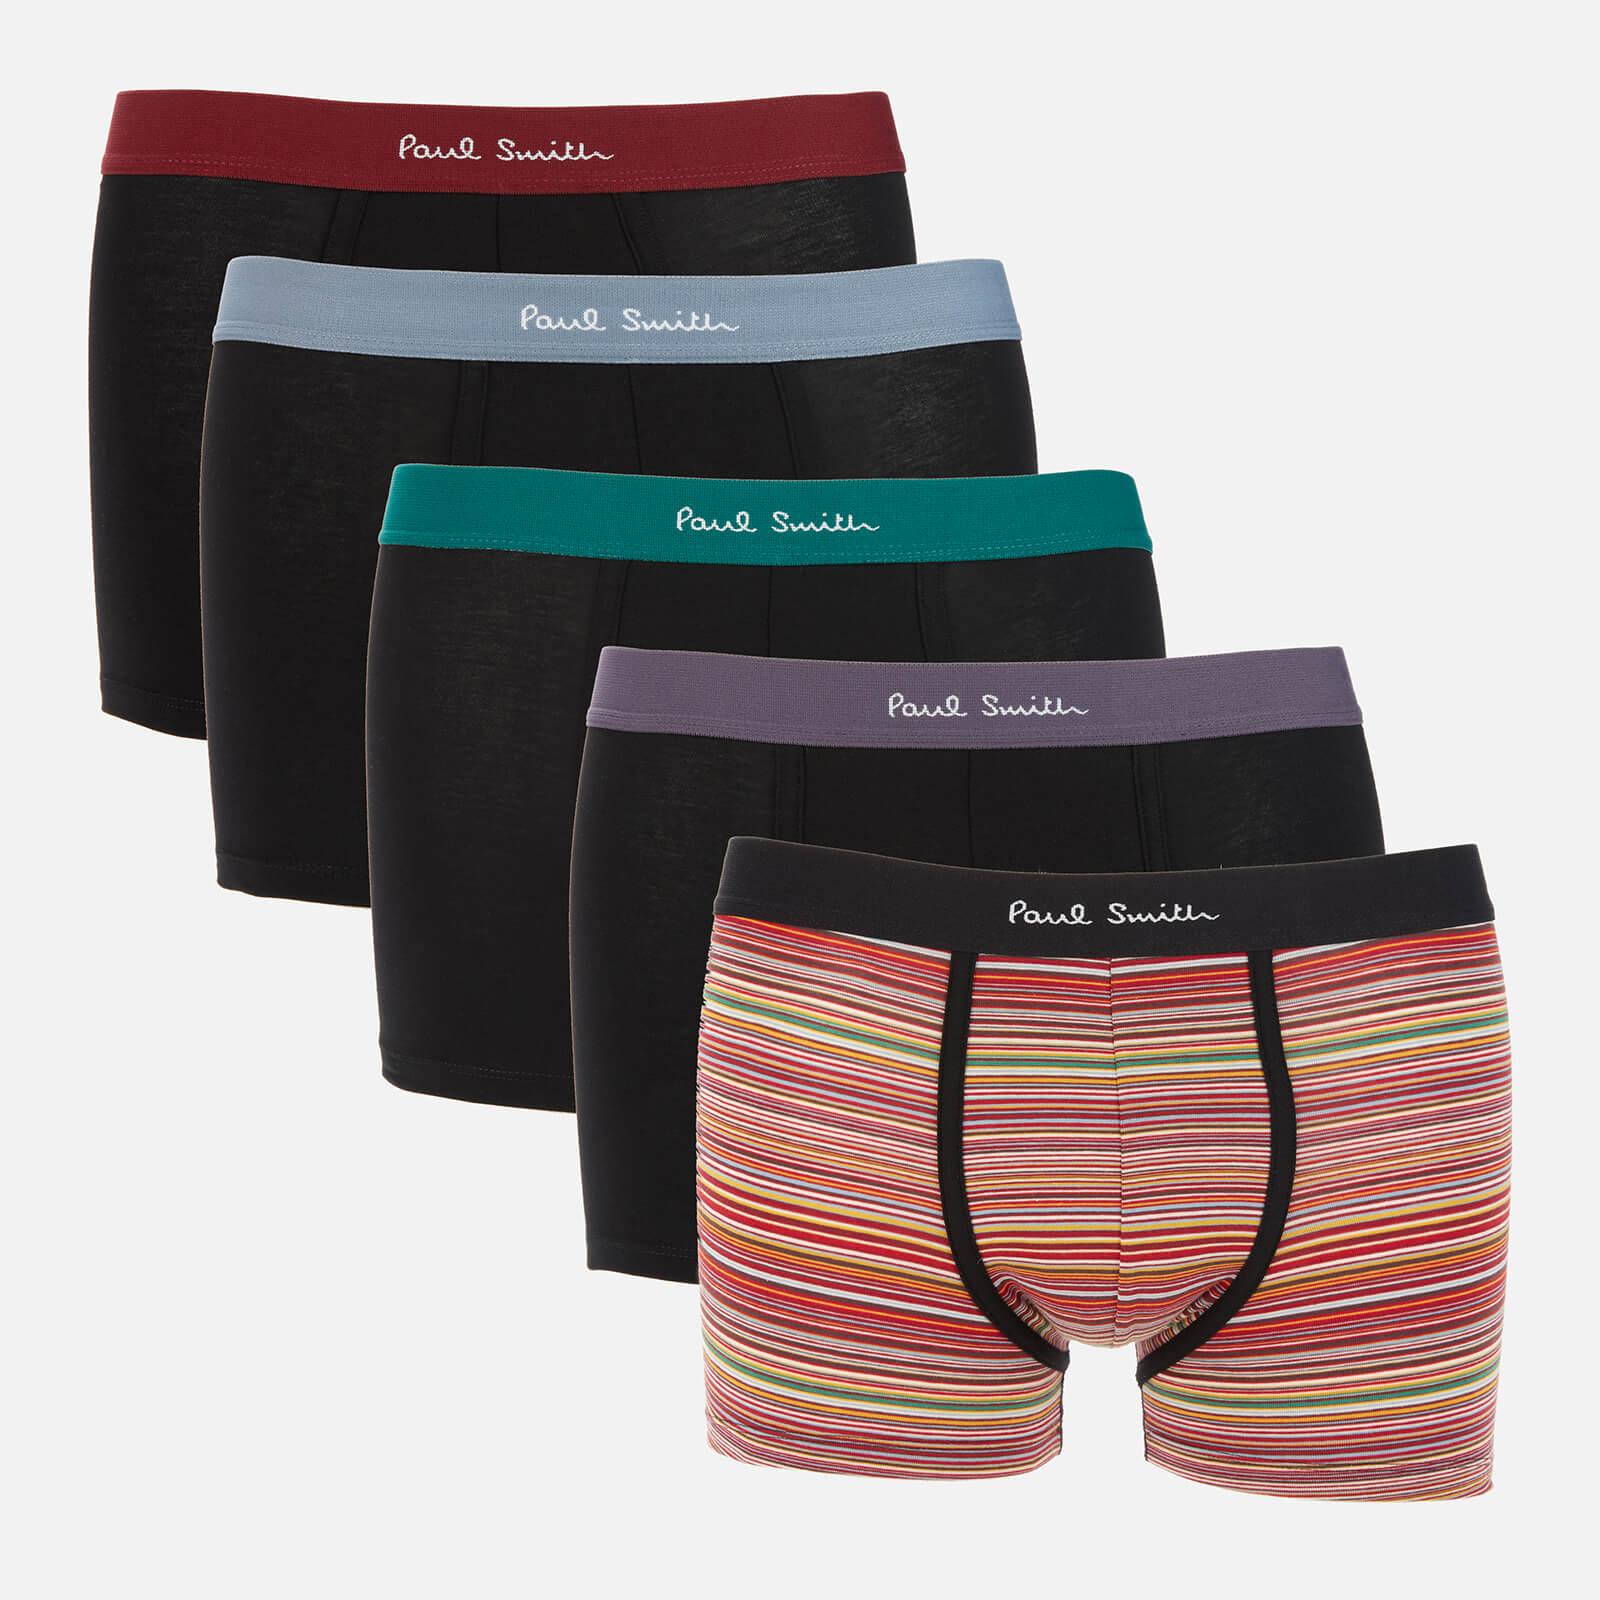 Ps Paul Smith Men's 5-Pack Trunk Boxer Shorts - Black/Multi Stripe - S